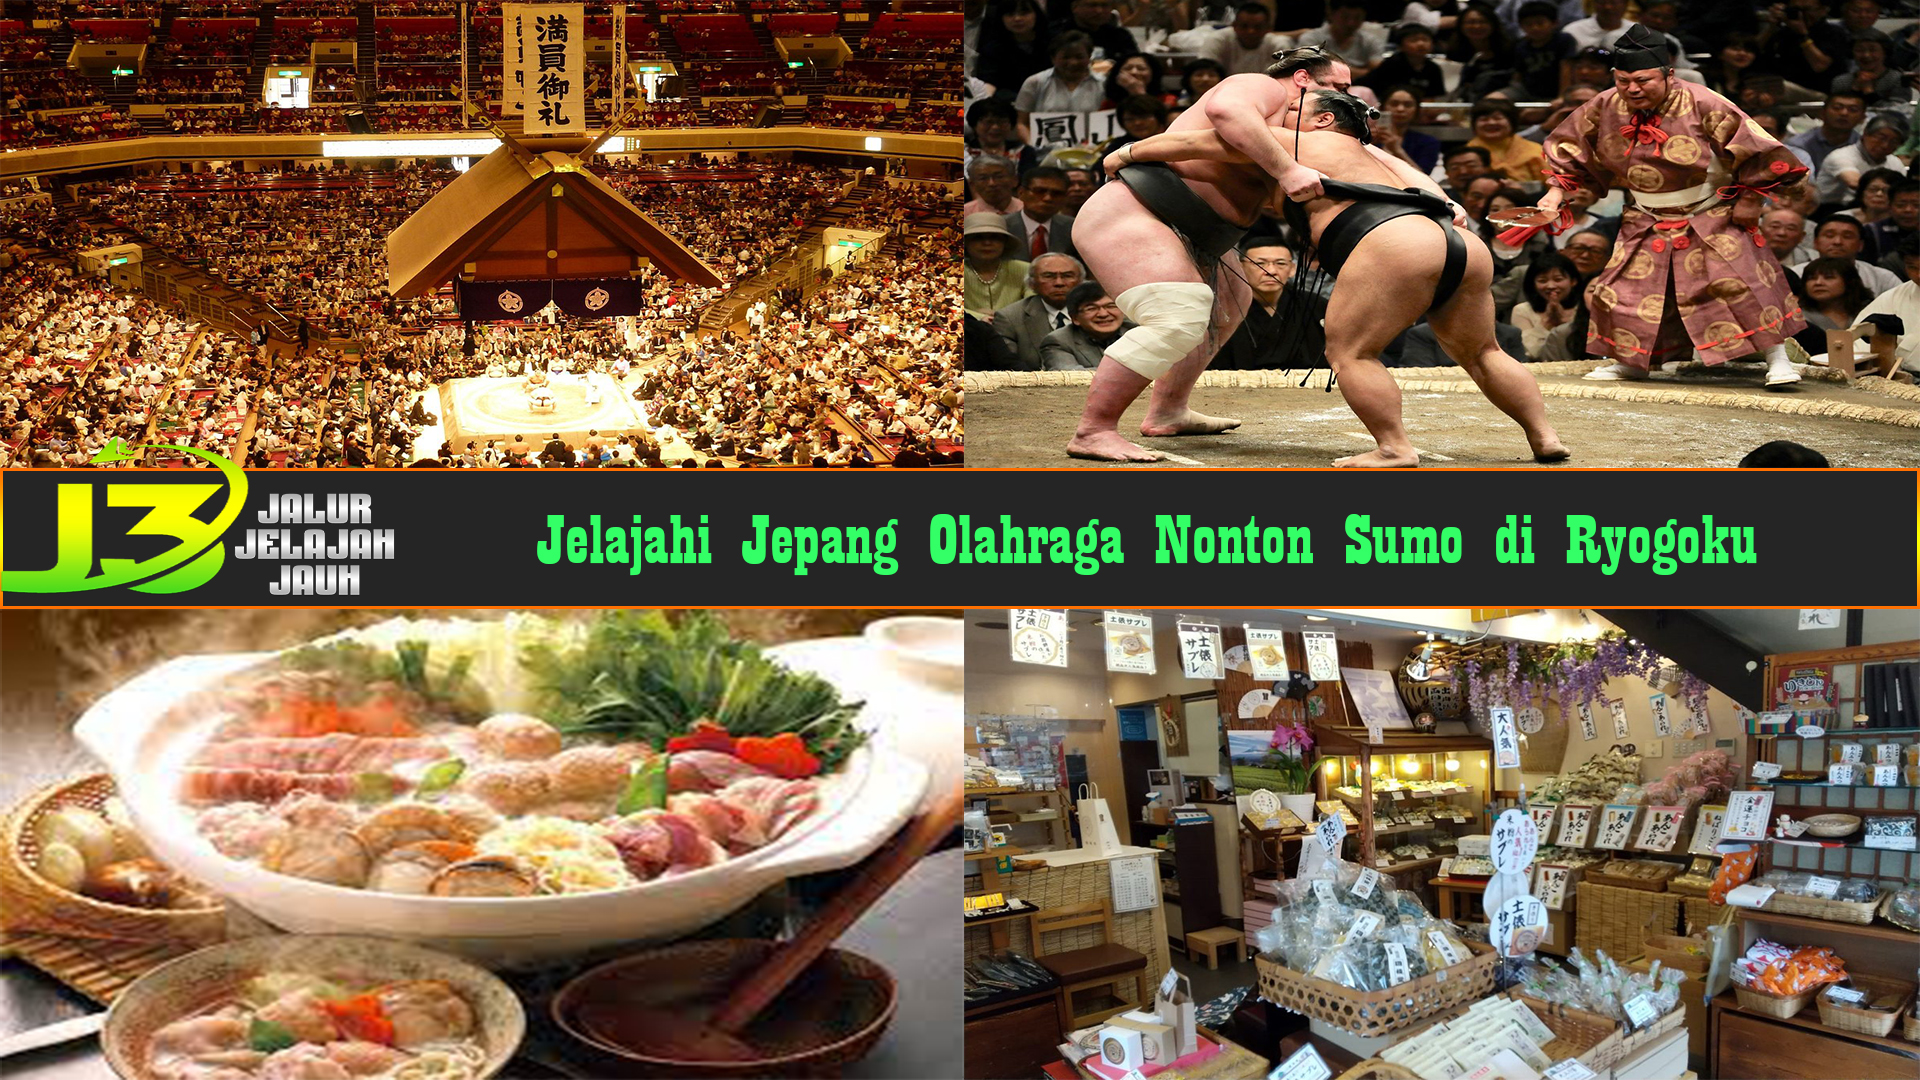 Jelajahi Jepang Olahraga Nonton Sumo di Ryogoku